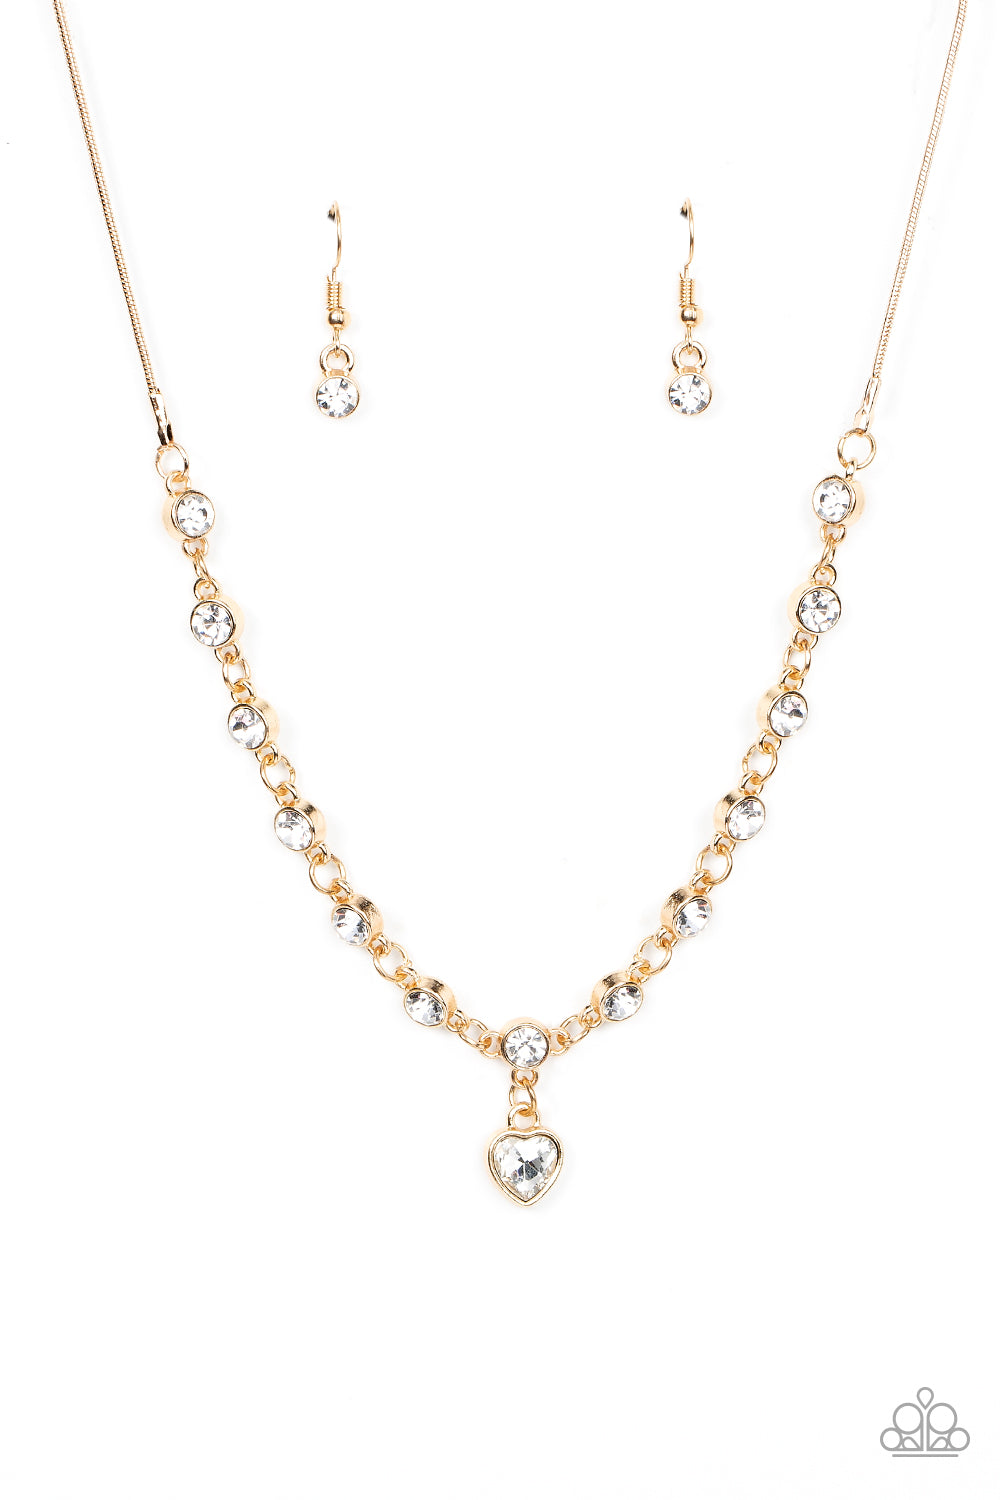 Paparazzi - True Love Trinket - Gold Necklace